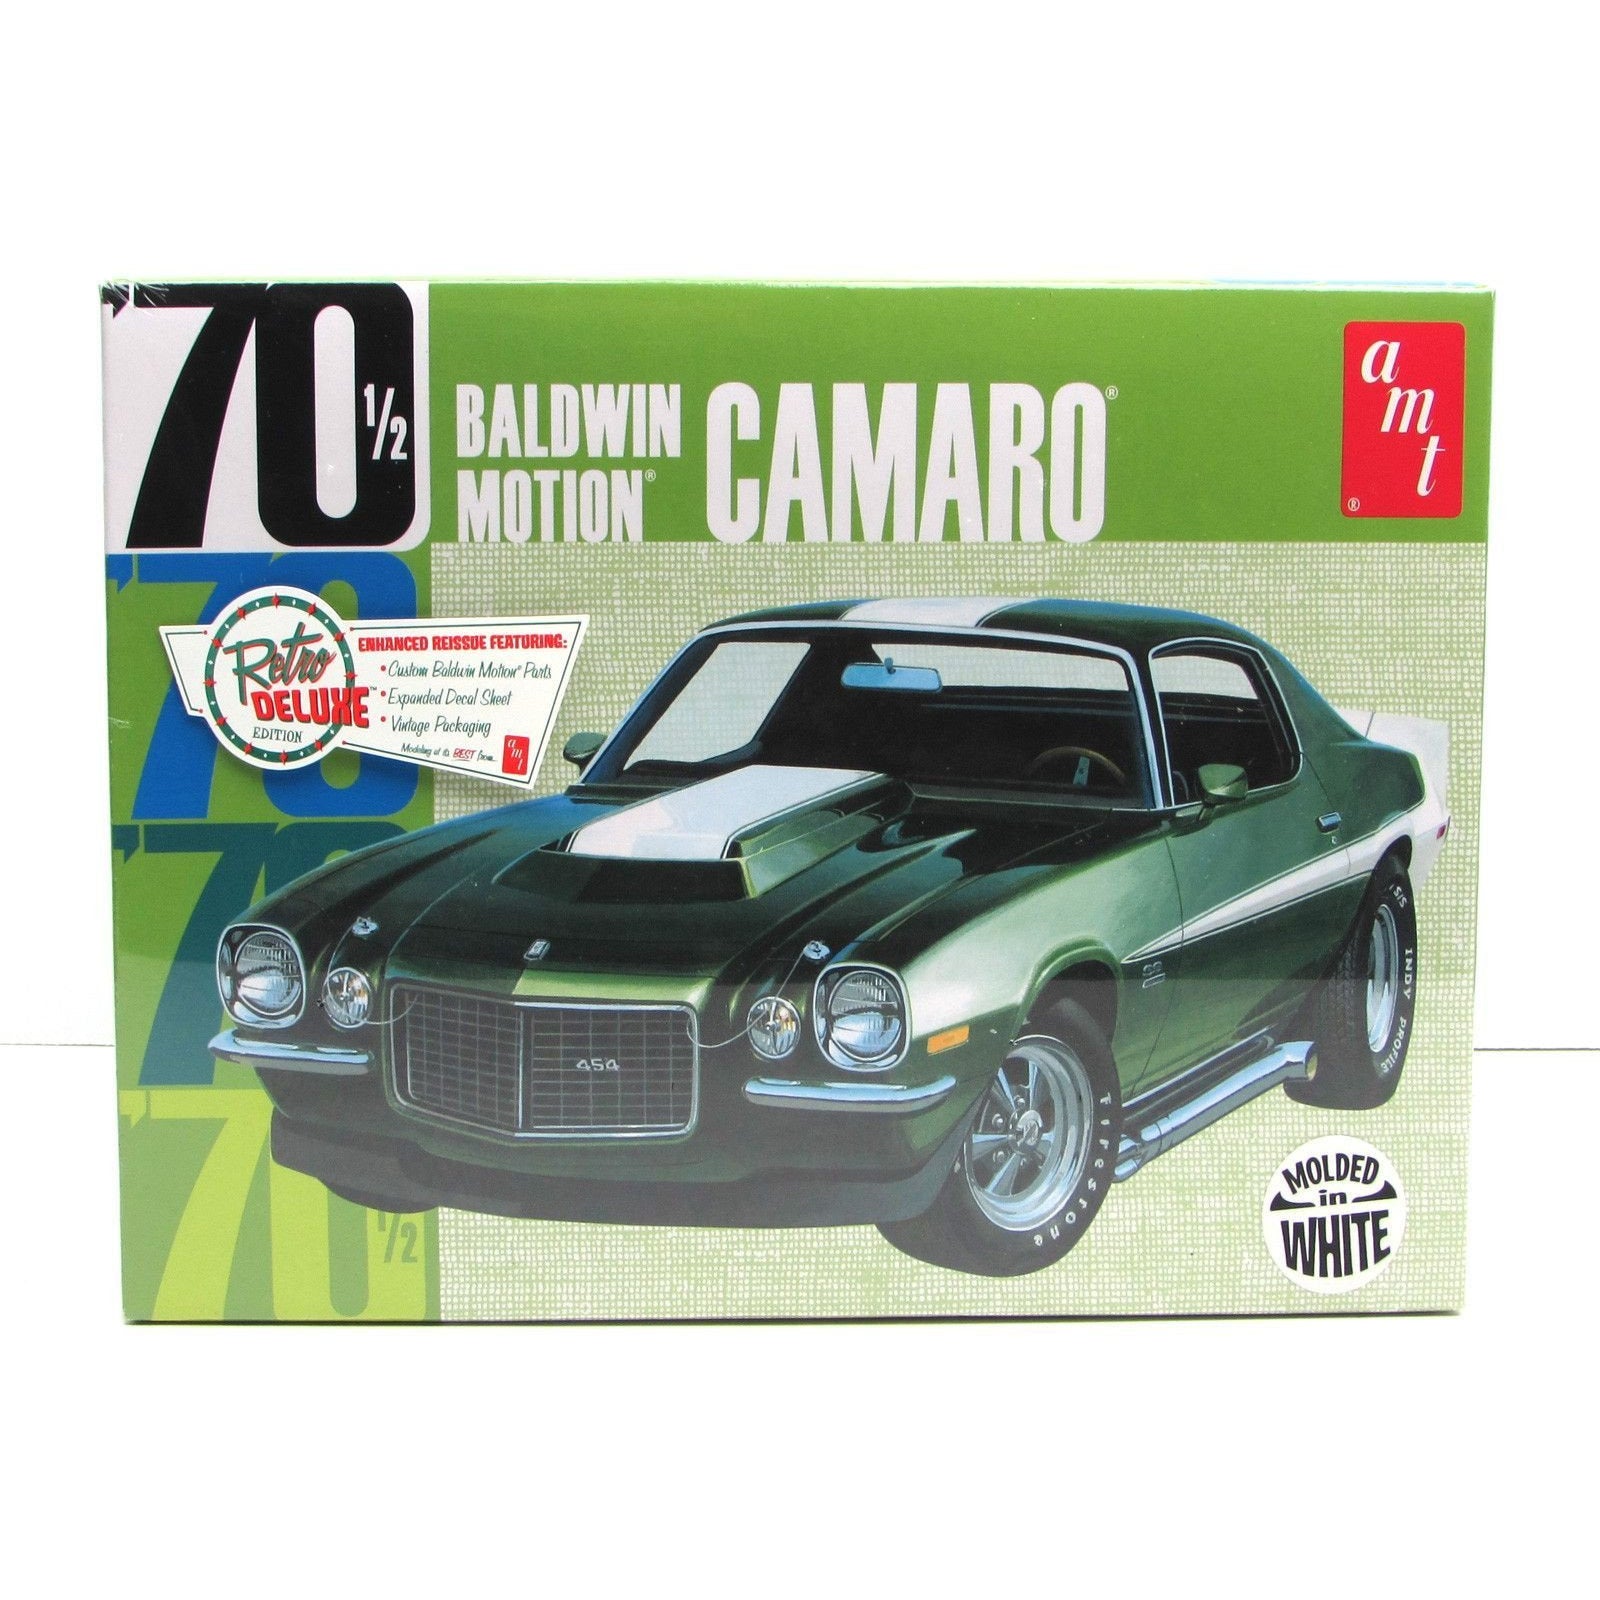 1970 Chevrolet Camaro 1/25 Model Car Kit #855 by AMT